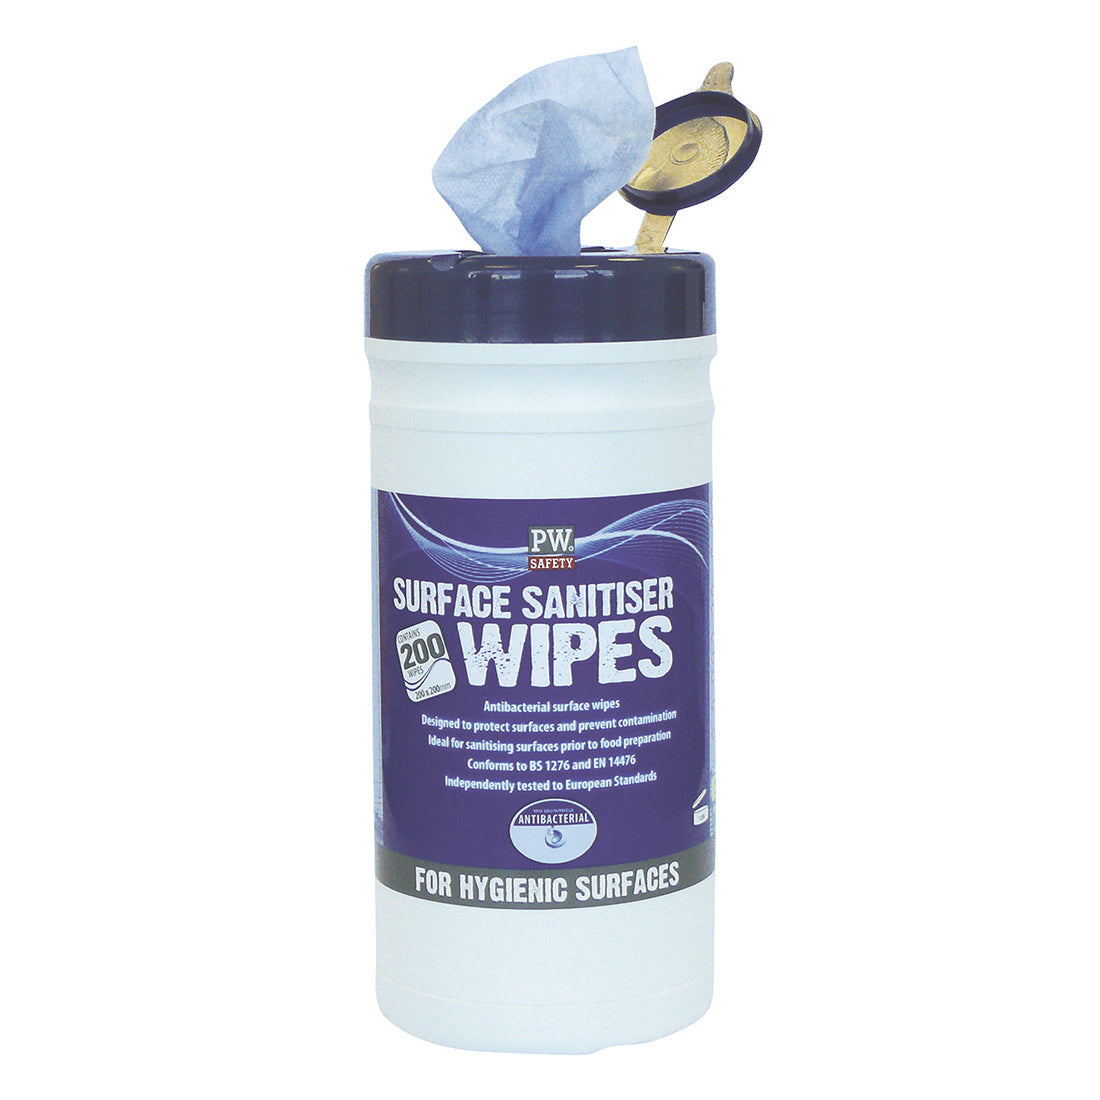 Portwest Surface Sanitiser Wipes (200 Wipes)